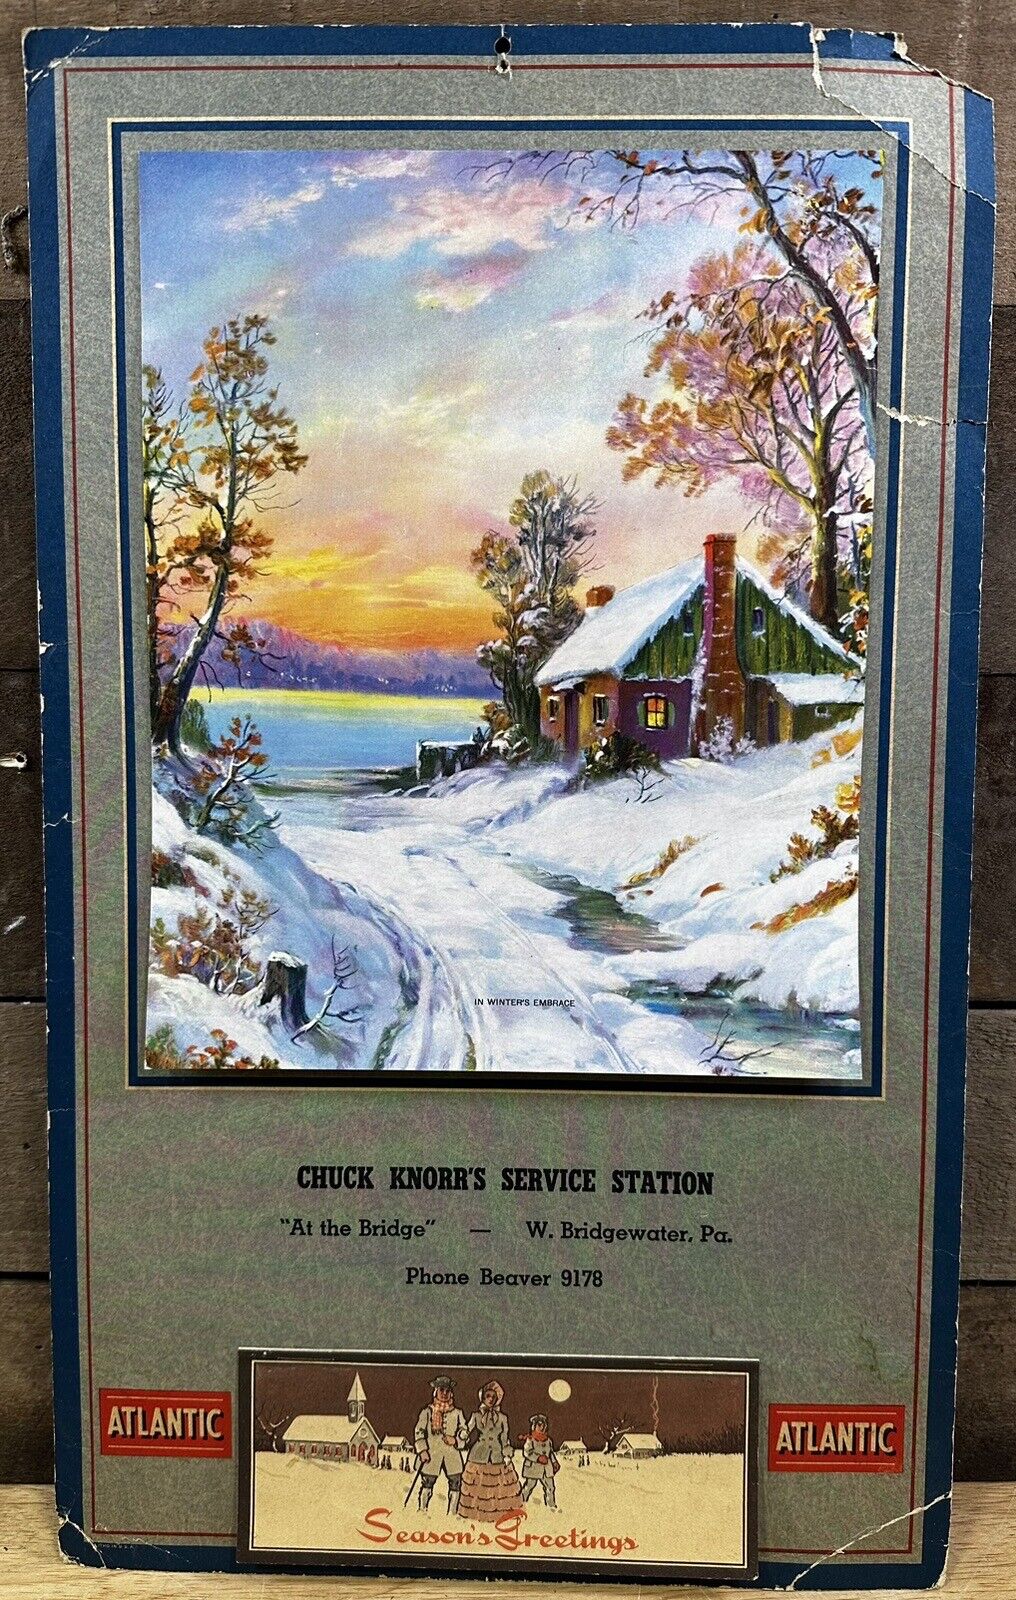 Vintage 1949 Atlantic Calendar “Chuck Knorr’s Service Station” W.Bridgewater PA